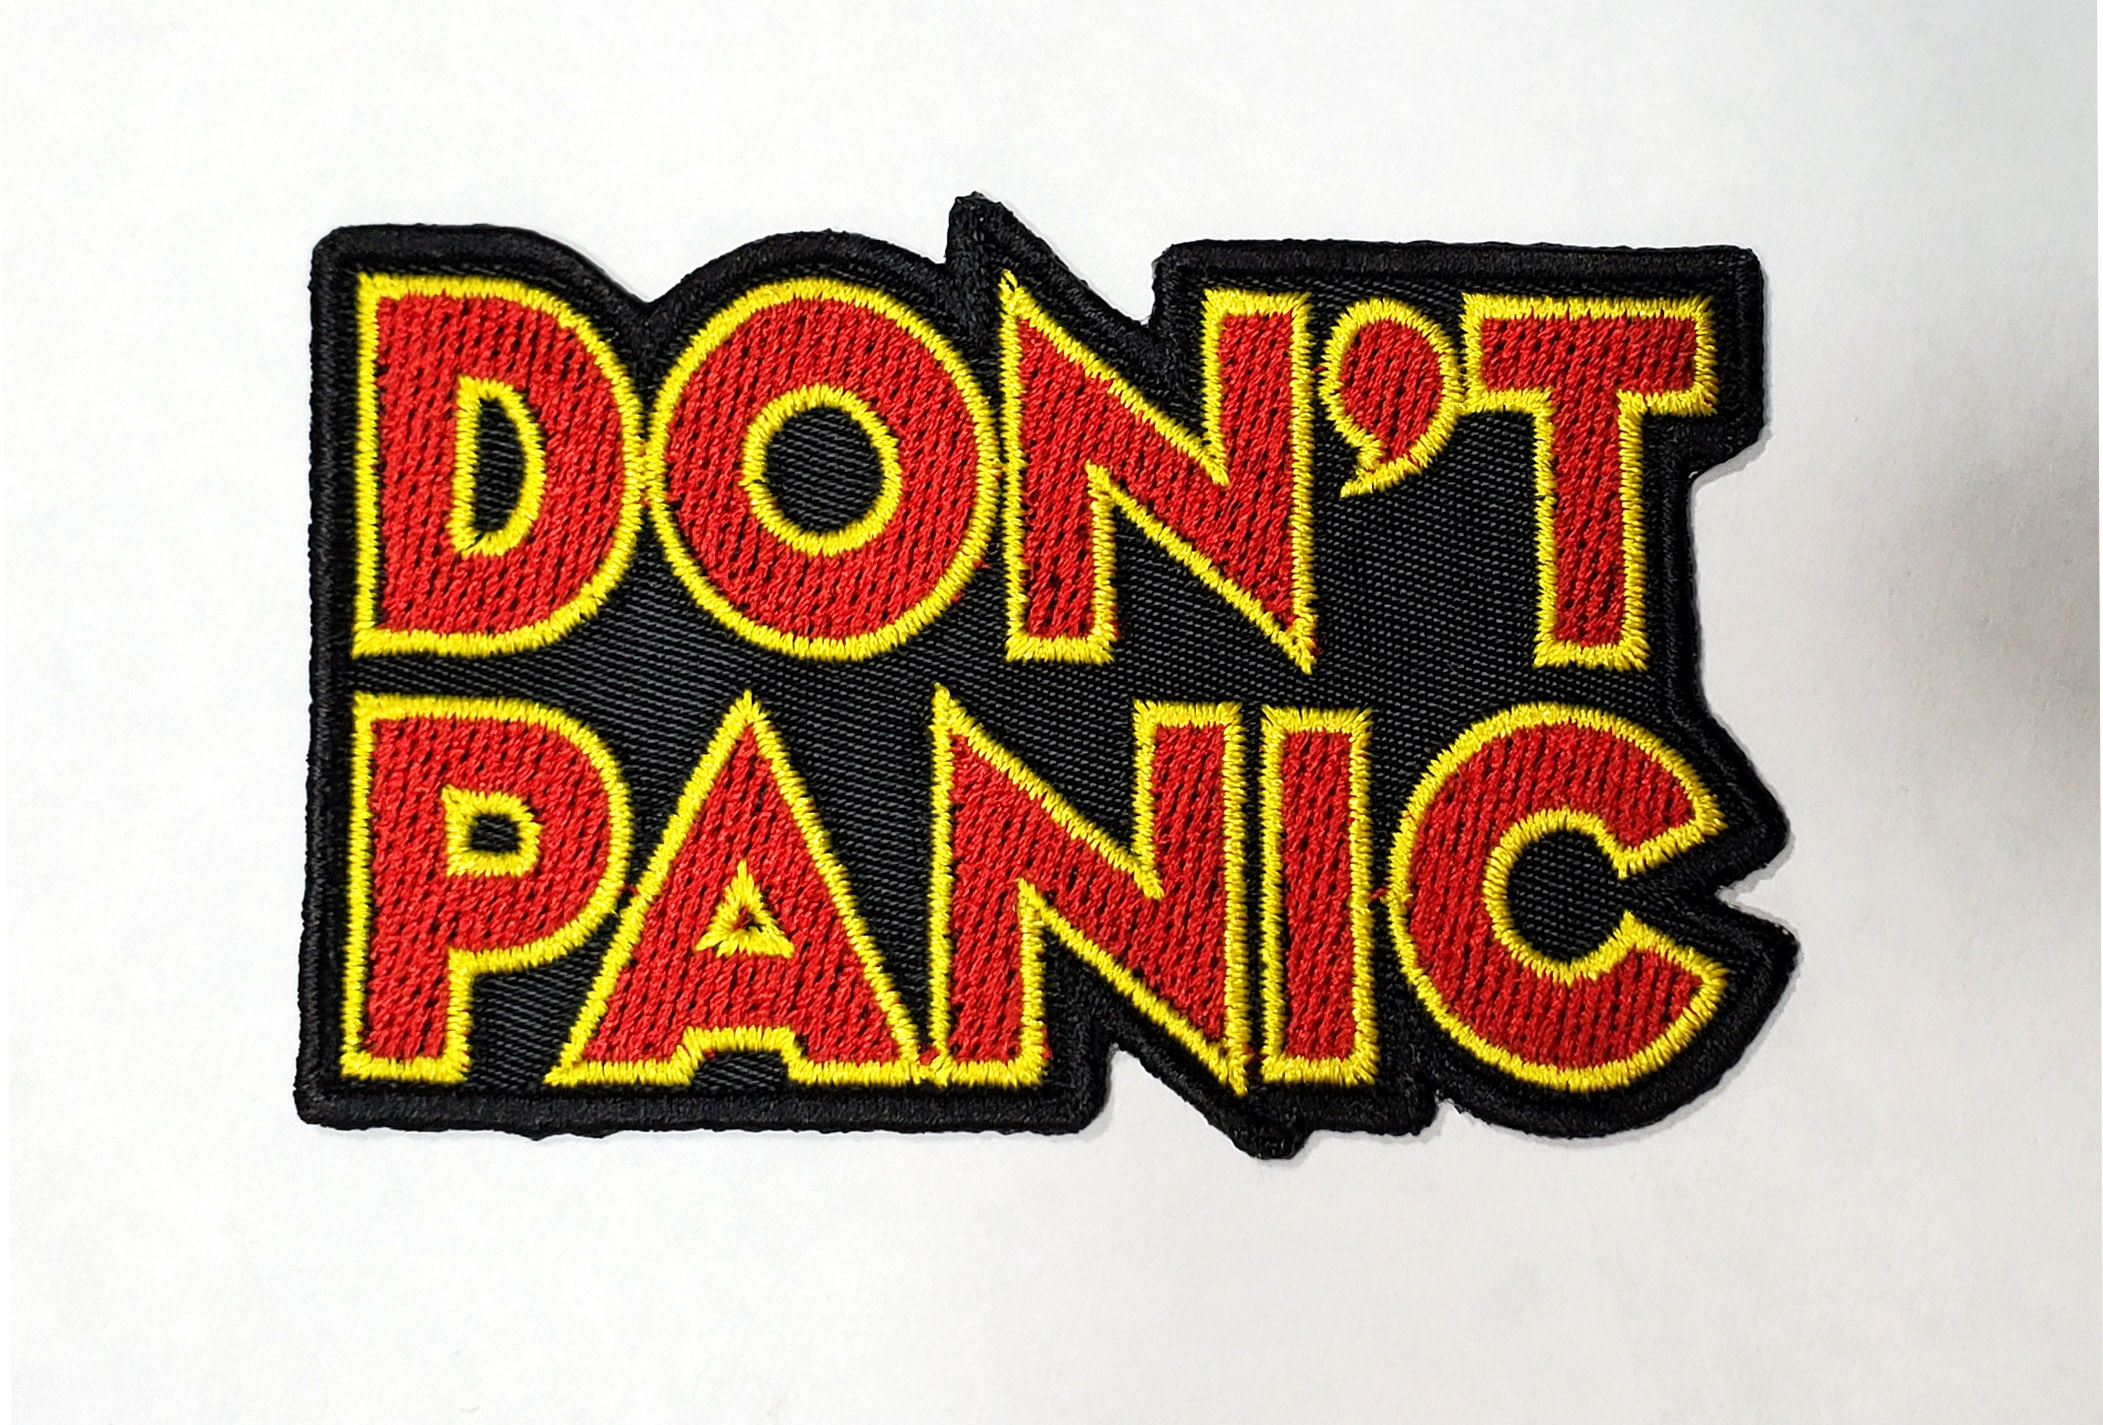 File:Don't Panic Badge.jpg - Wikimedia Commons